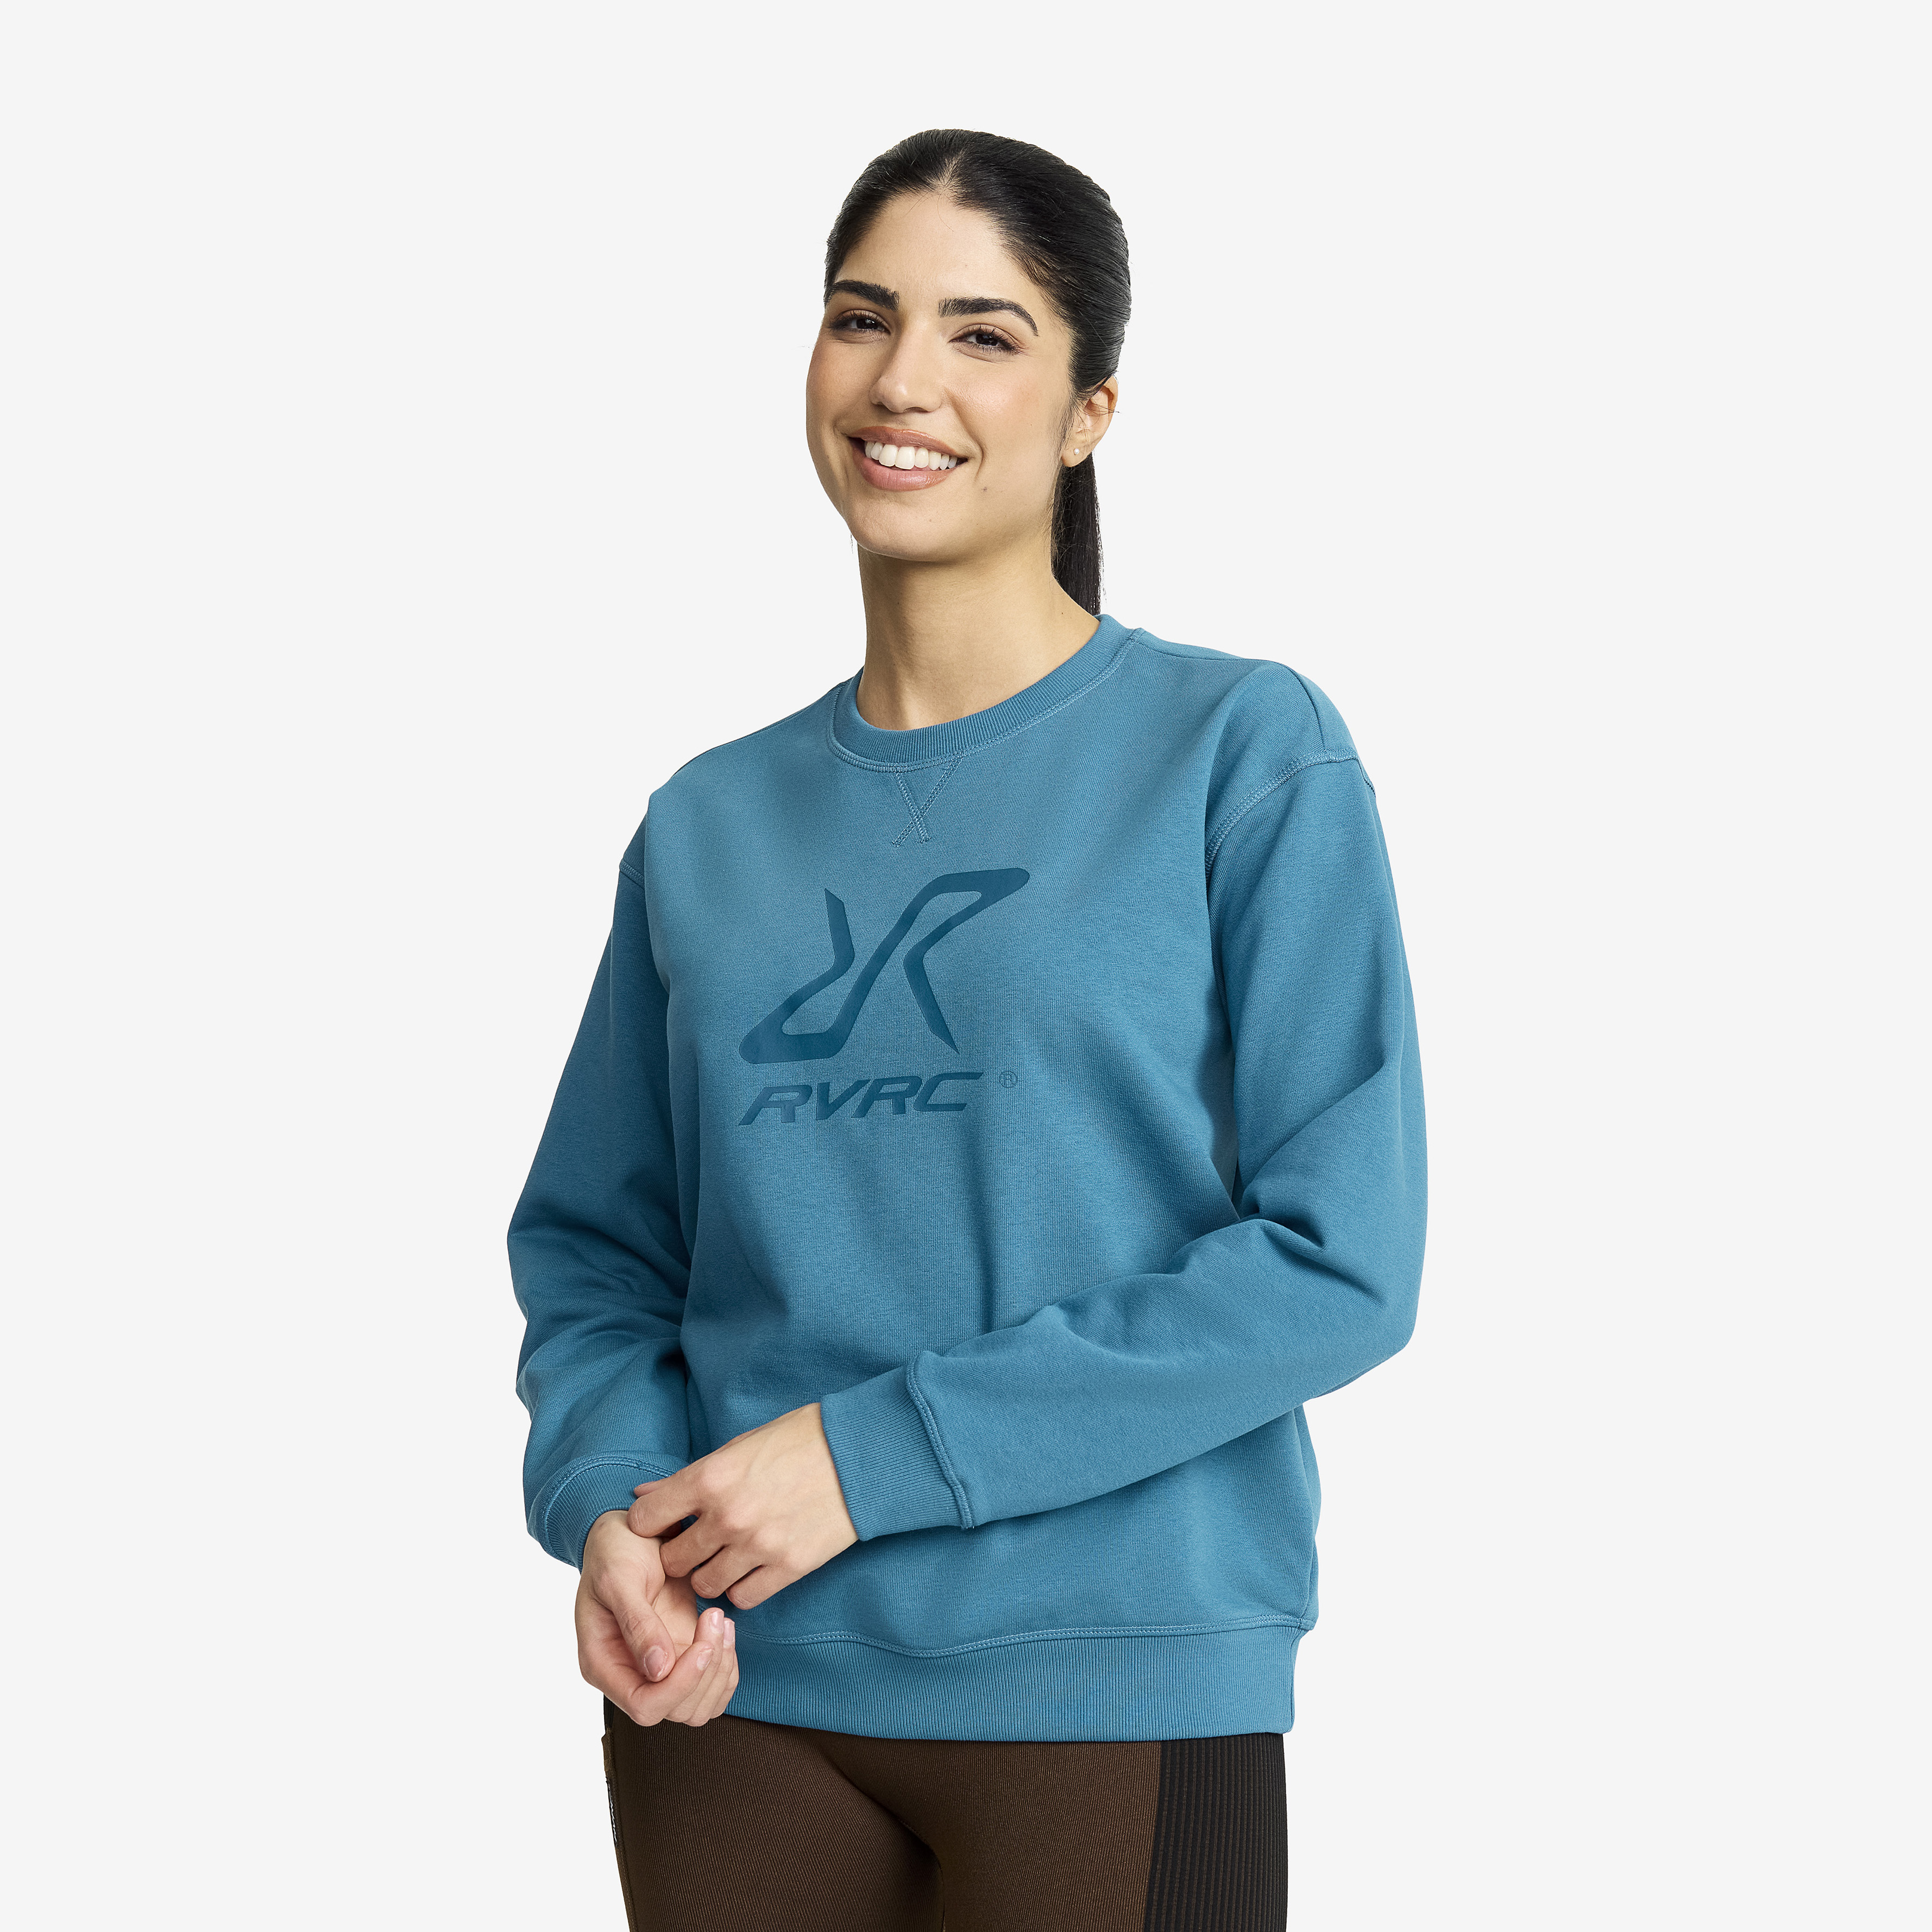 RVRC Sweatshirt Saxony Blue Donna